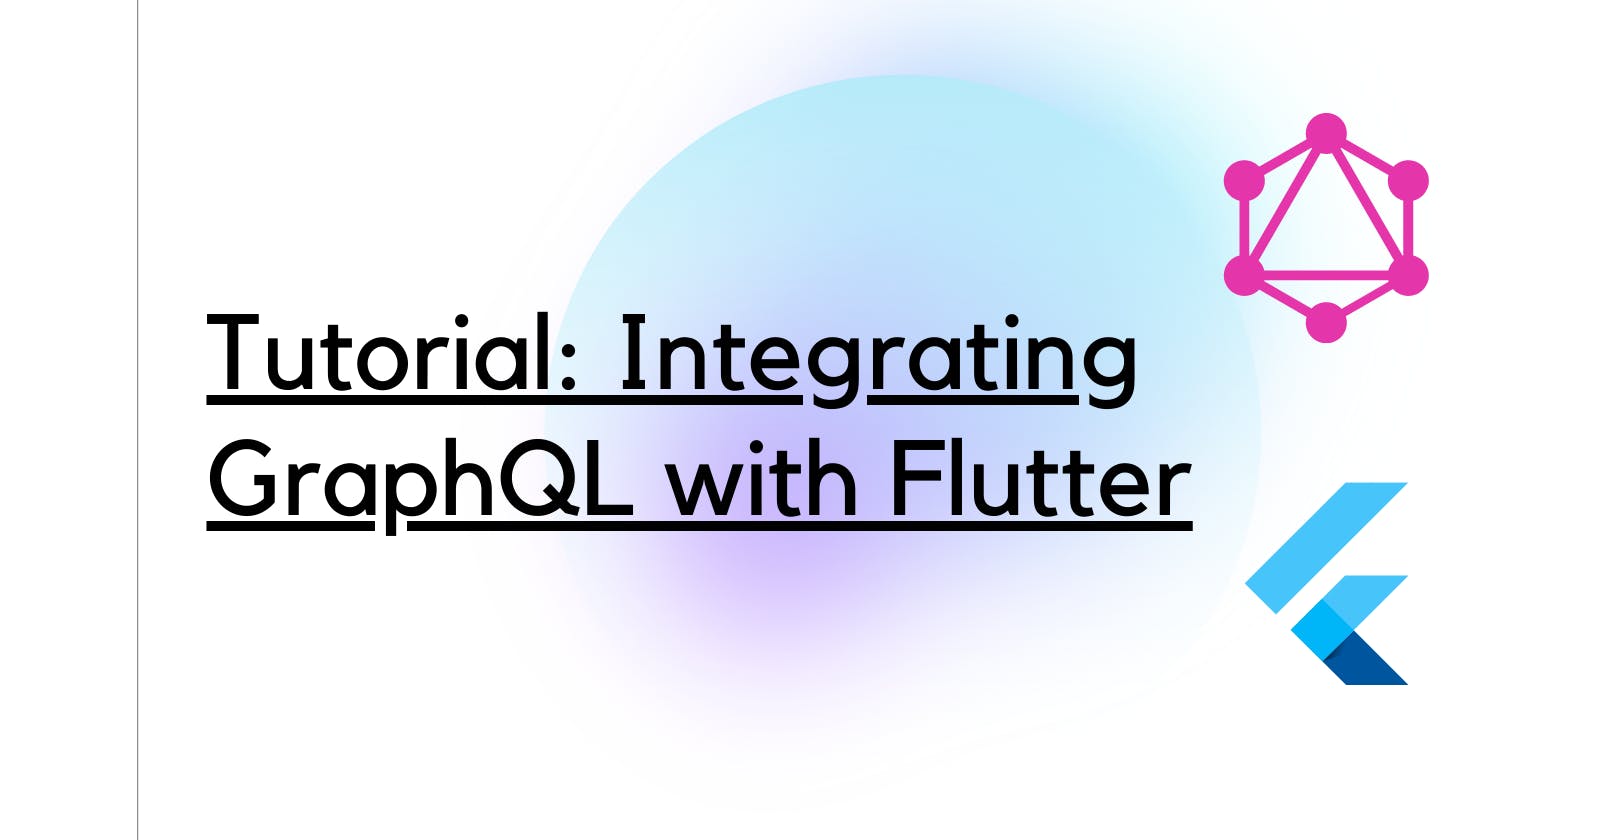 Tutorial: Integrating GraphQL with Flutter